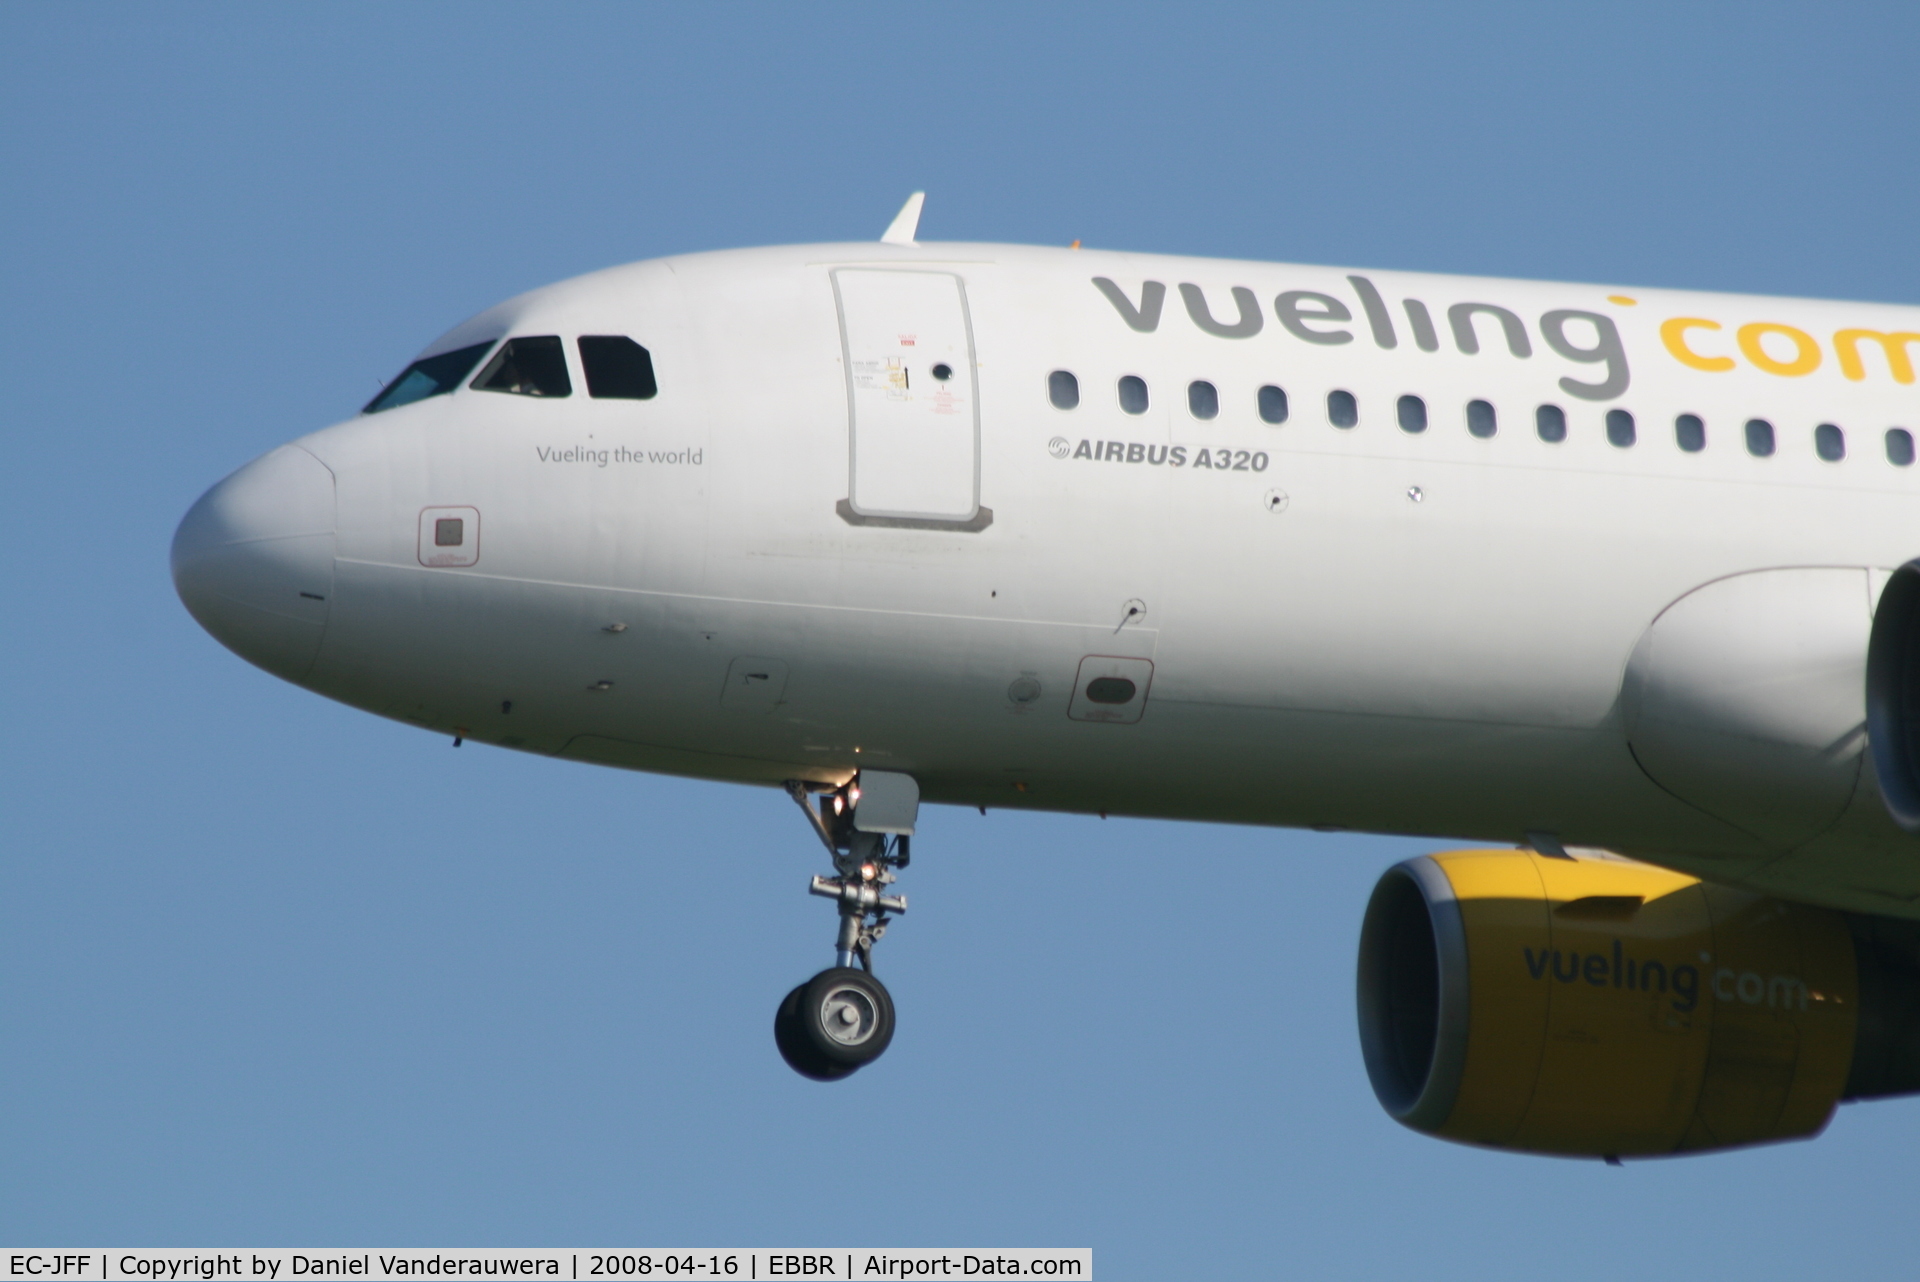 EC-JFF, 2005 Airbus A320-214 C/N 2388, flight VY5210 is descending to rwy 25L